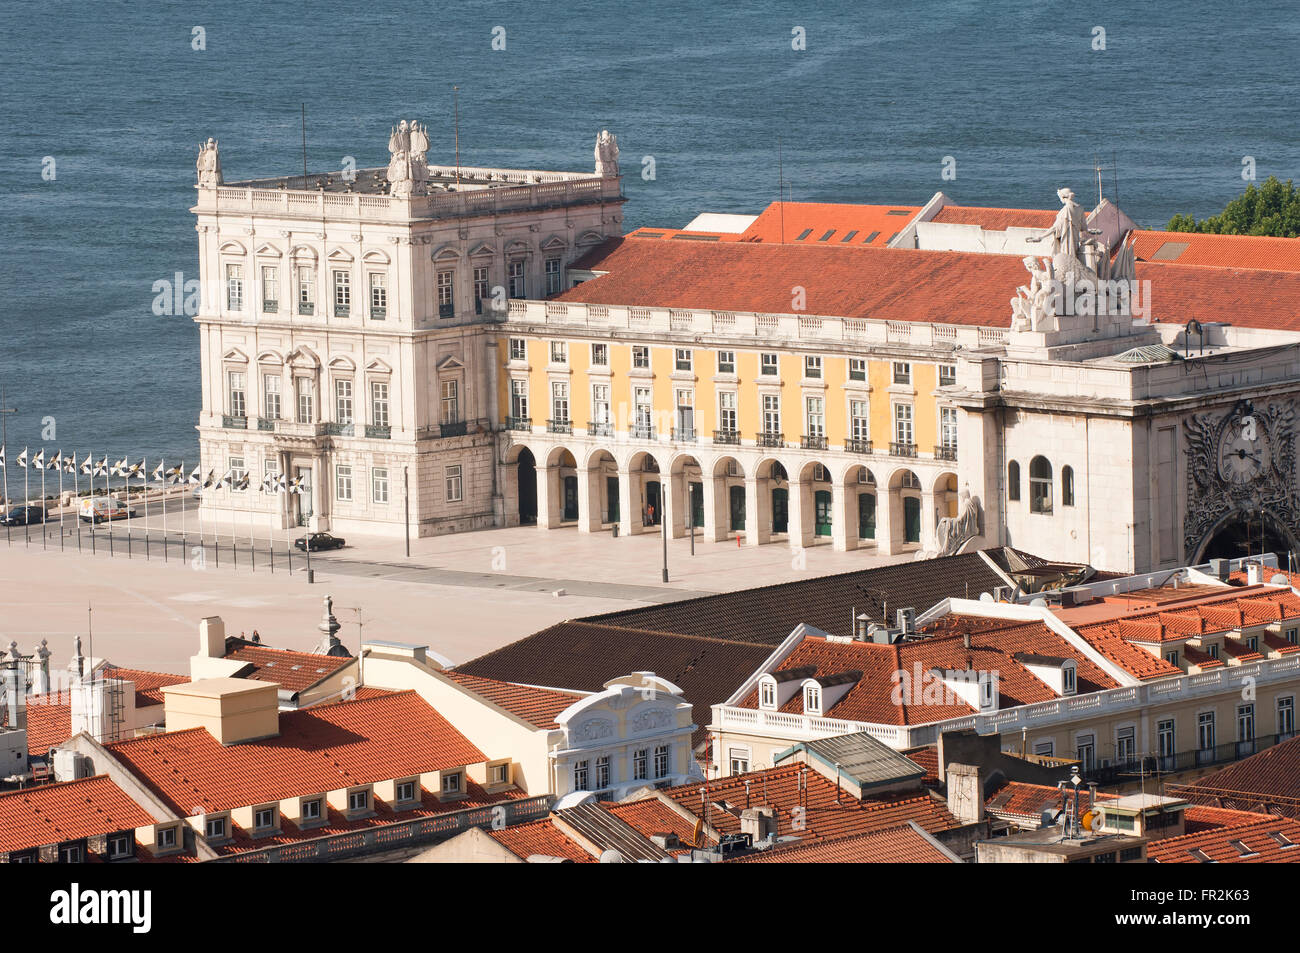 Praça do comercio (commerce square) near Tajus river, Baixa district, Lisbon, Portugal Stock Photo